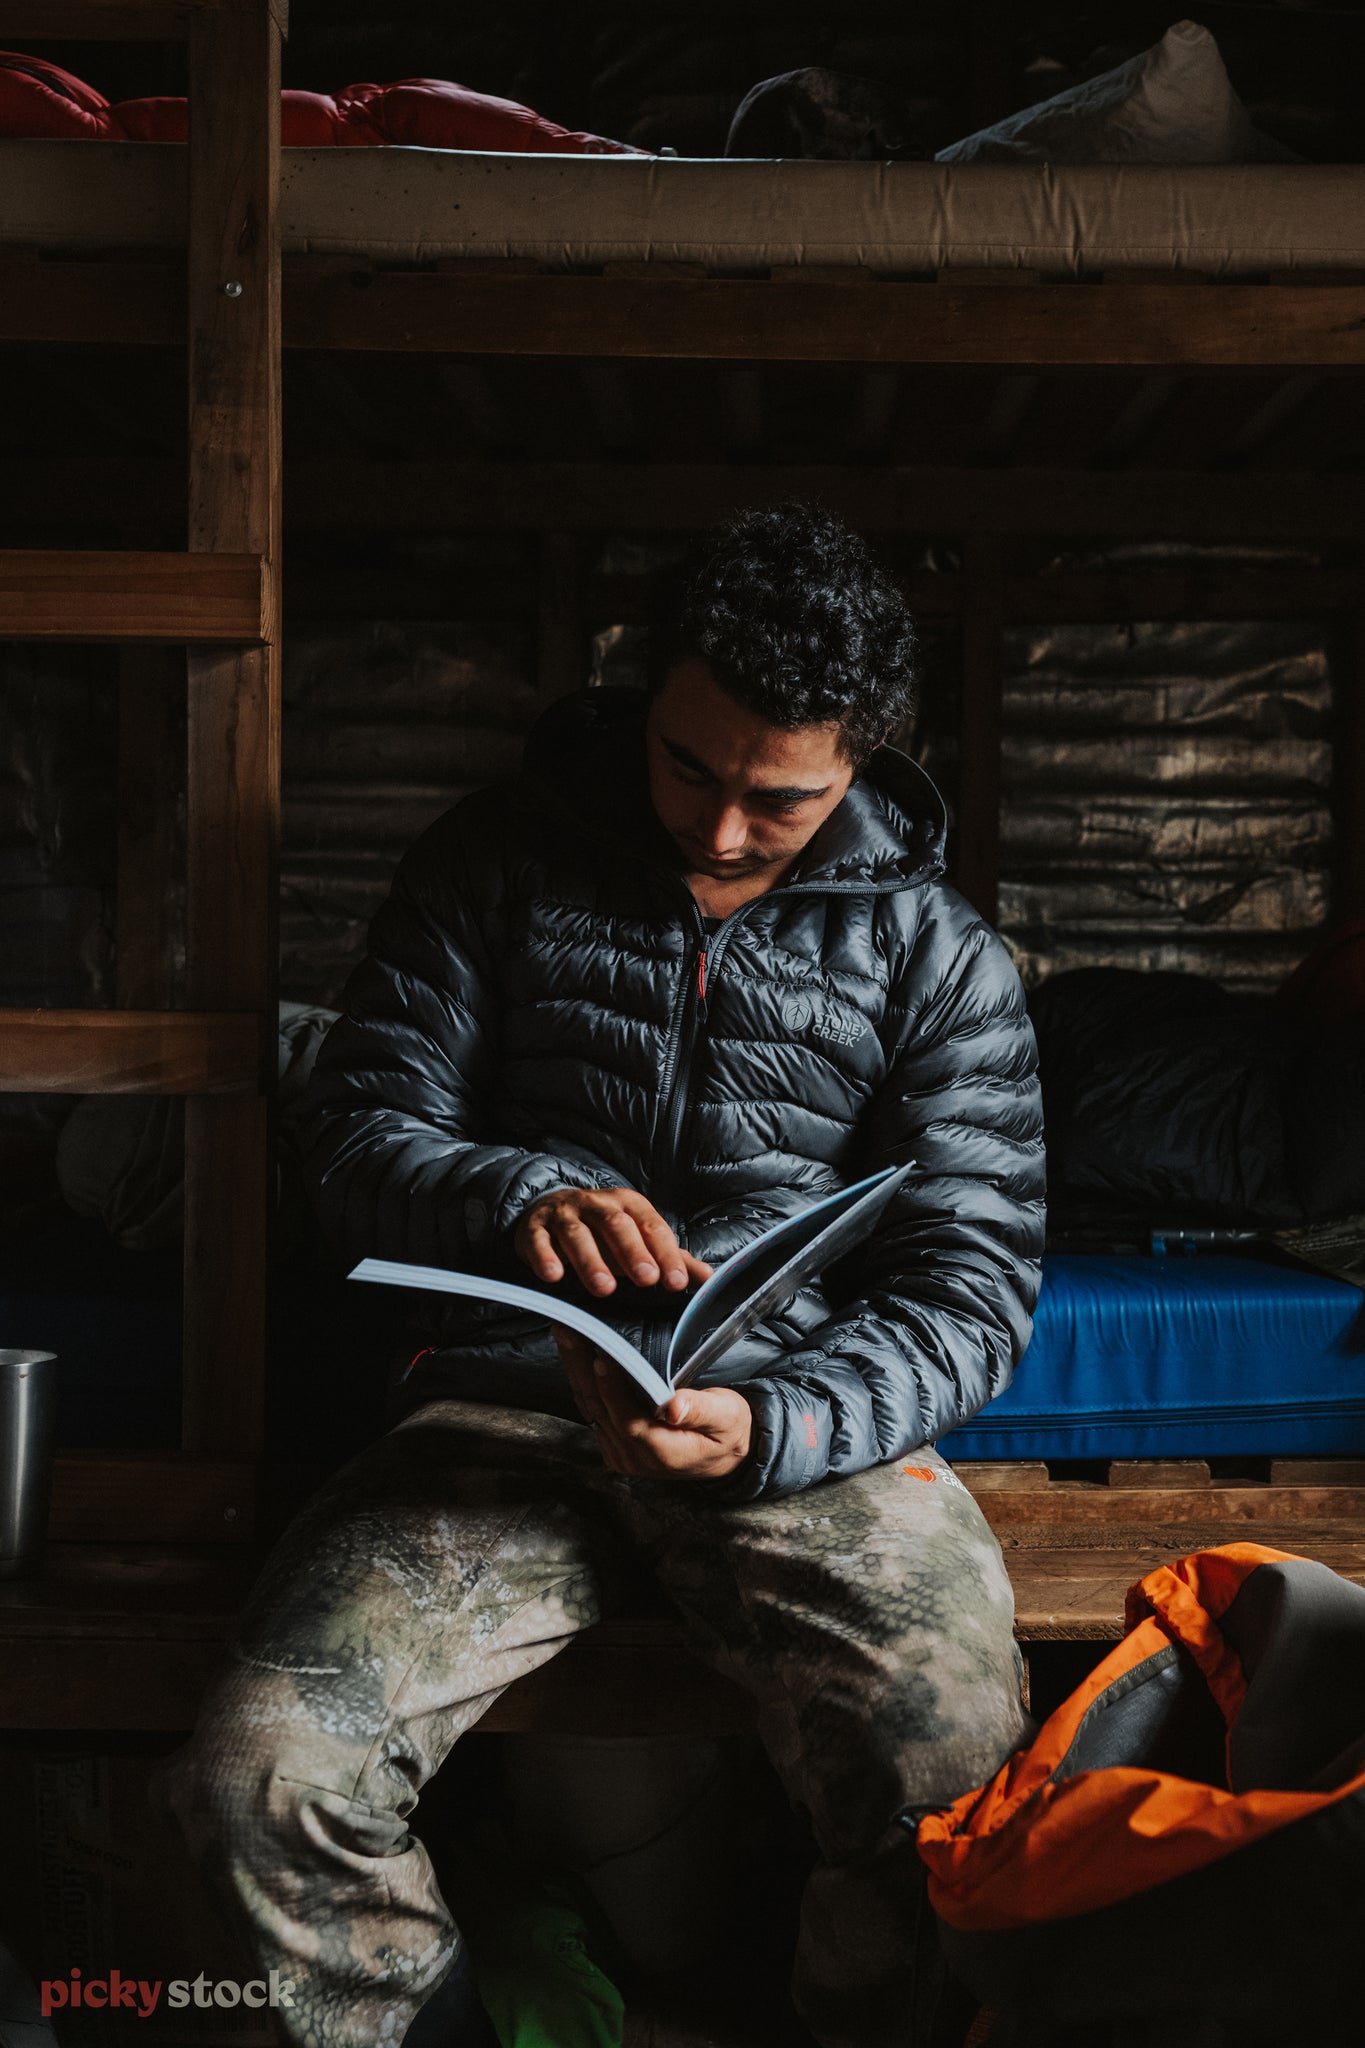 Tramper in hut reading